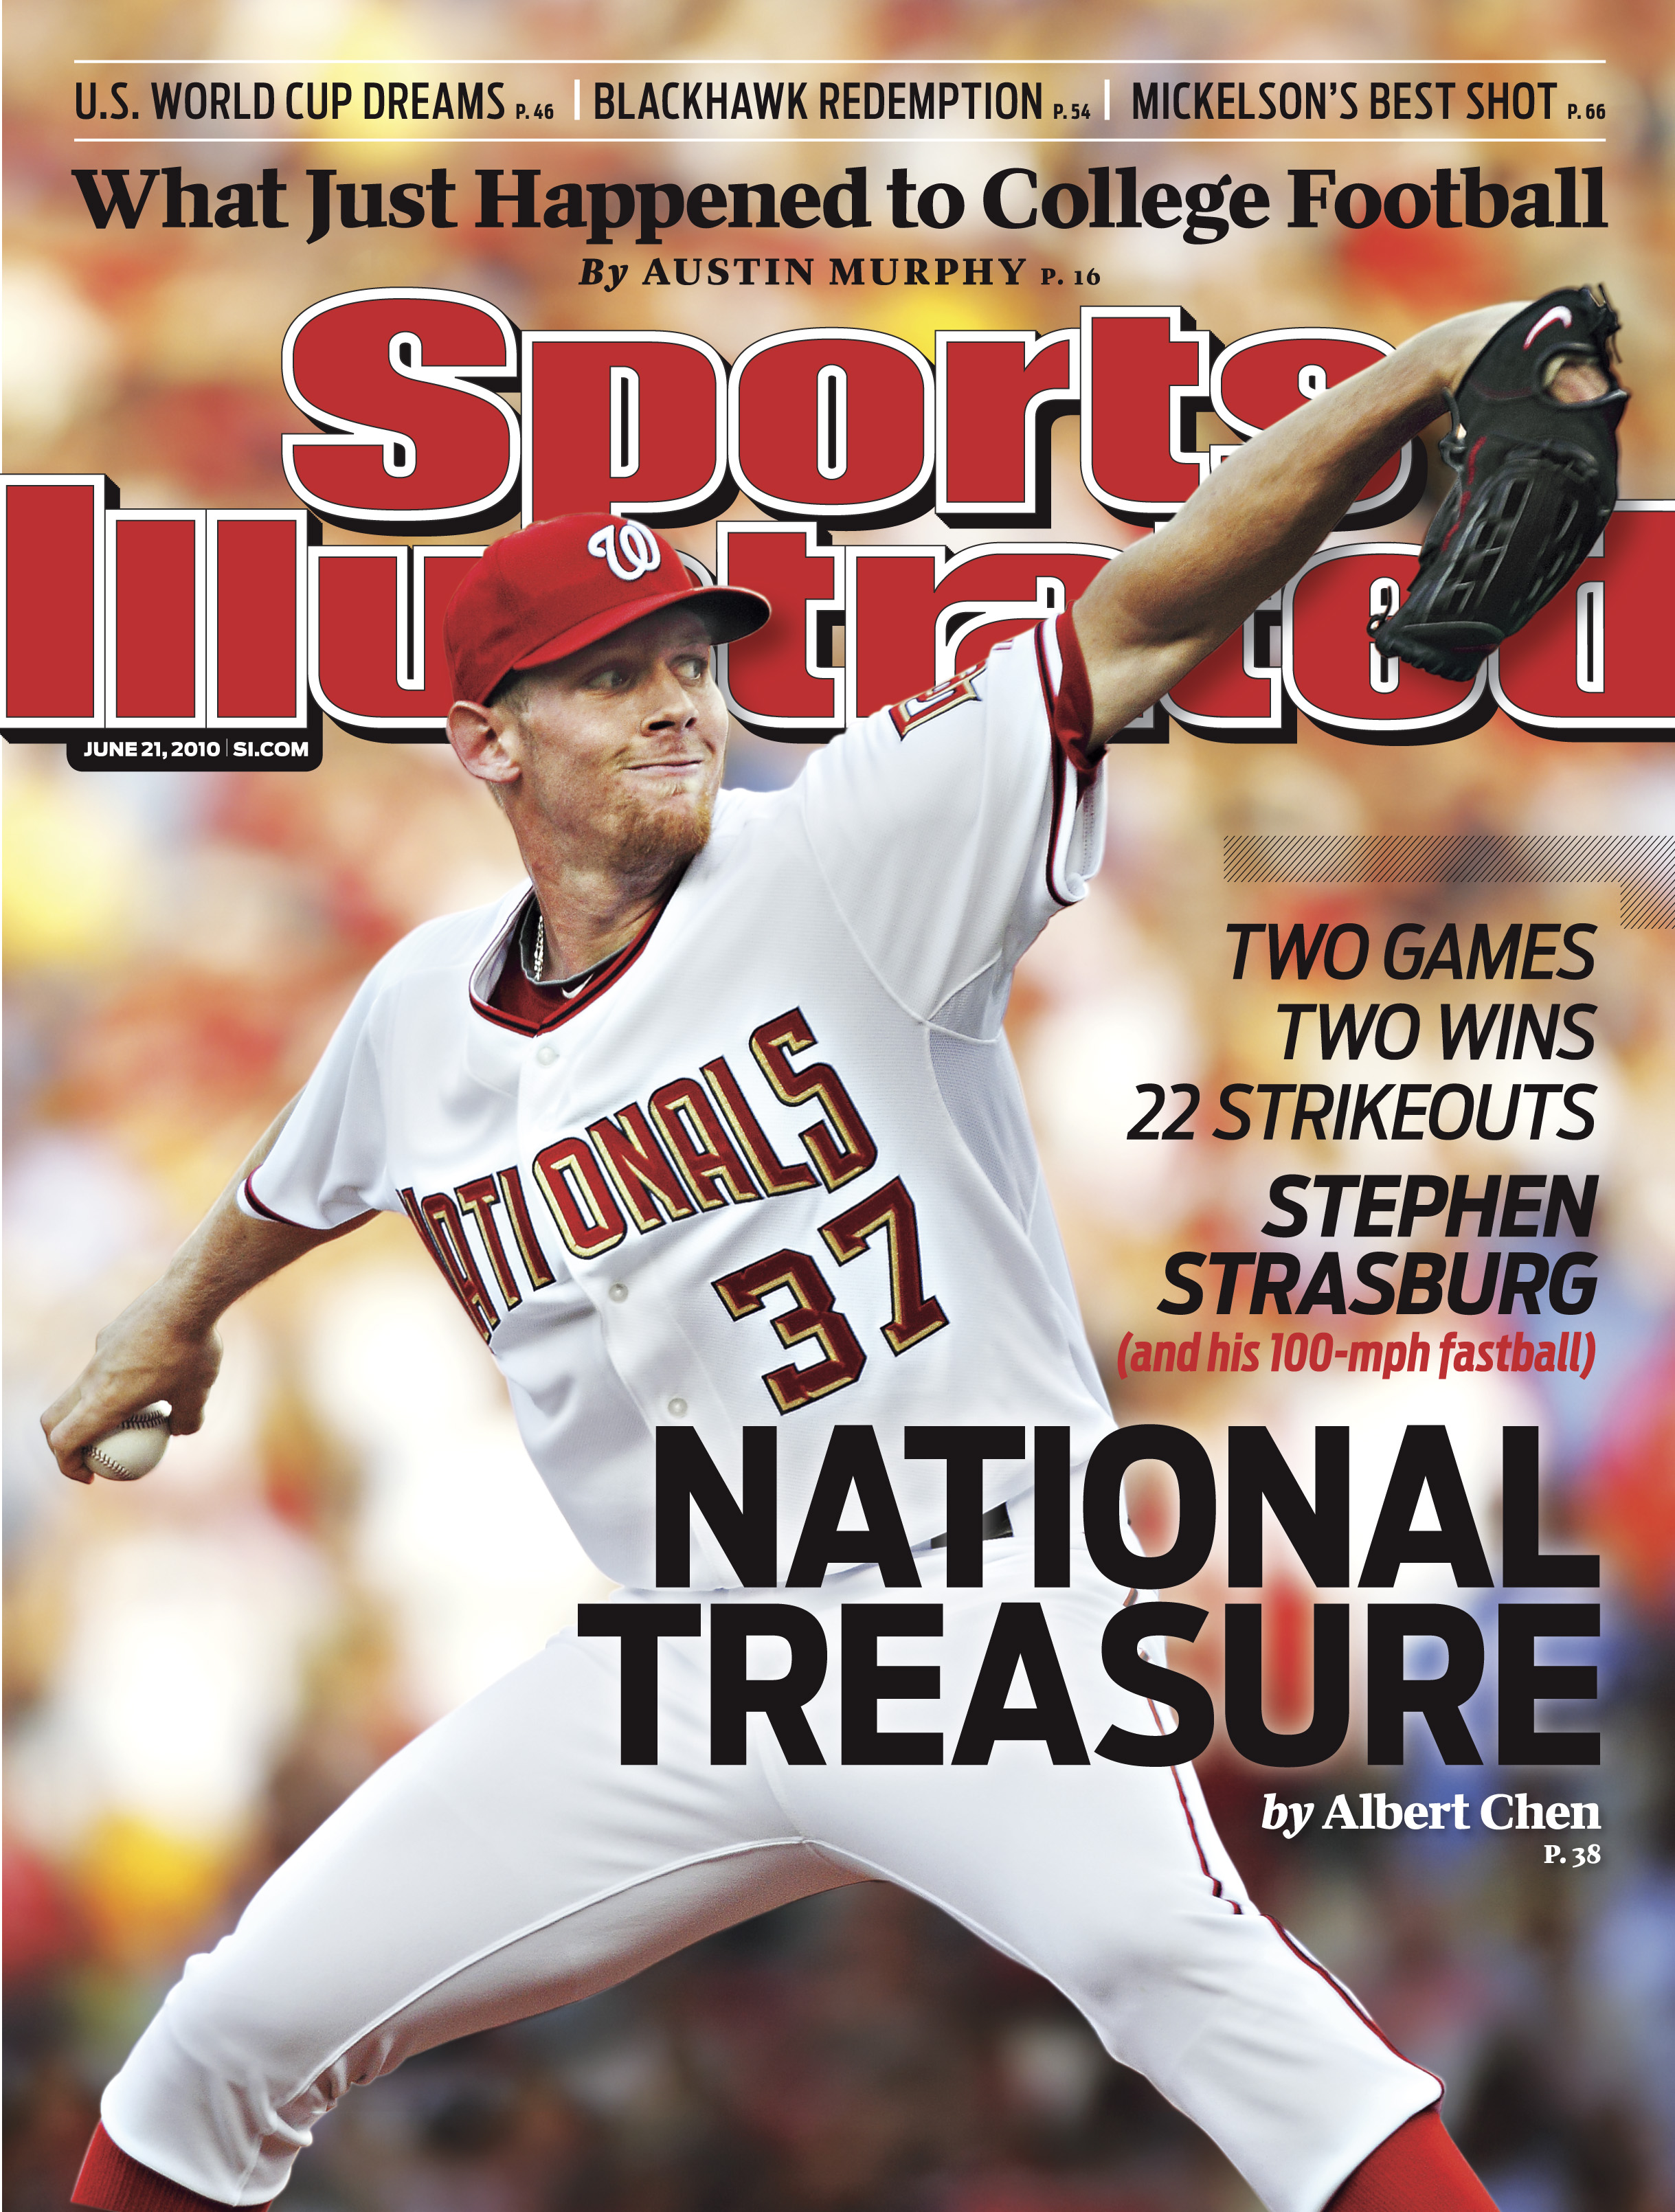 Ten years ago Stephen Strasburg made his MLB debut